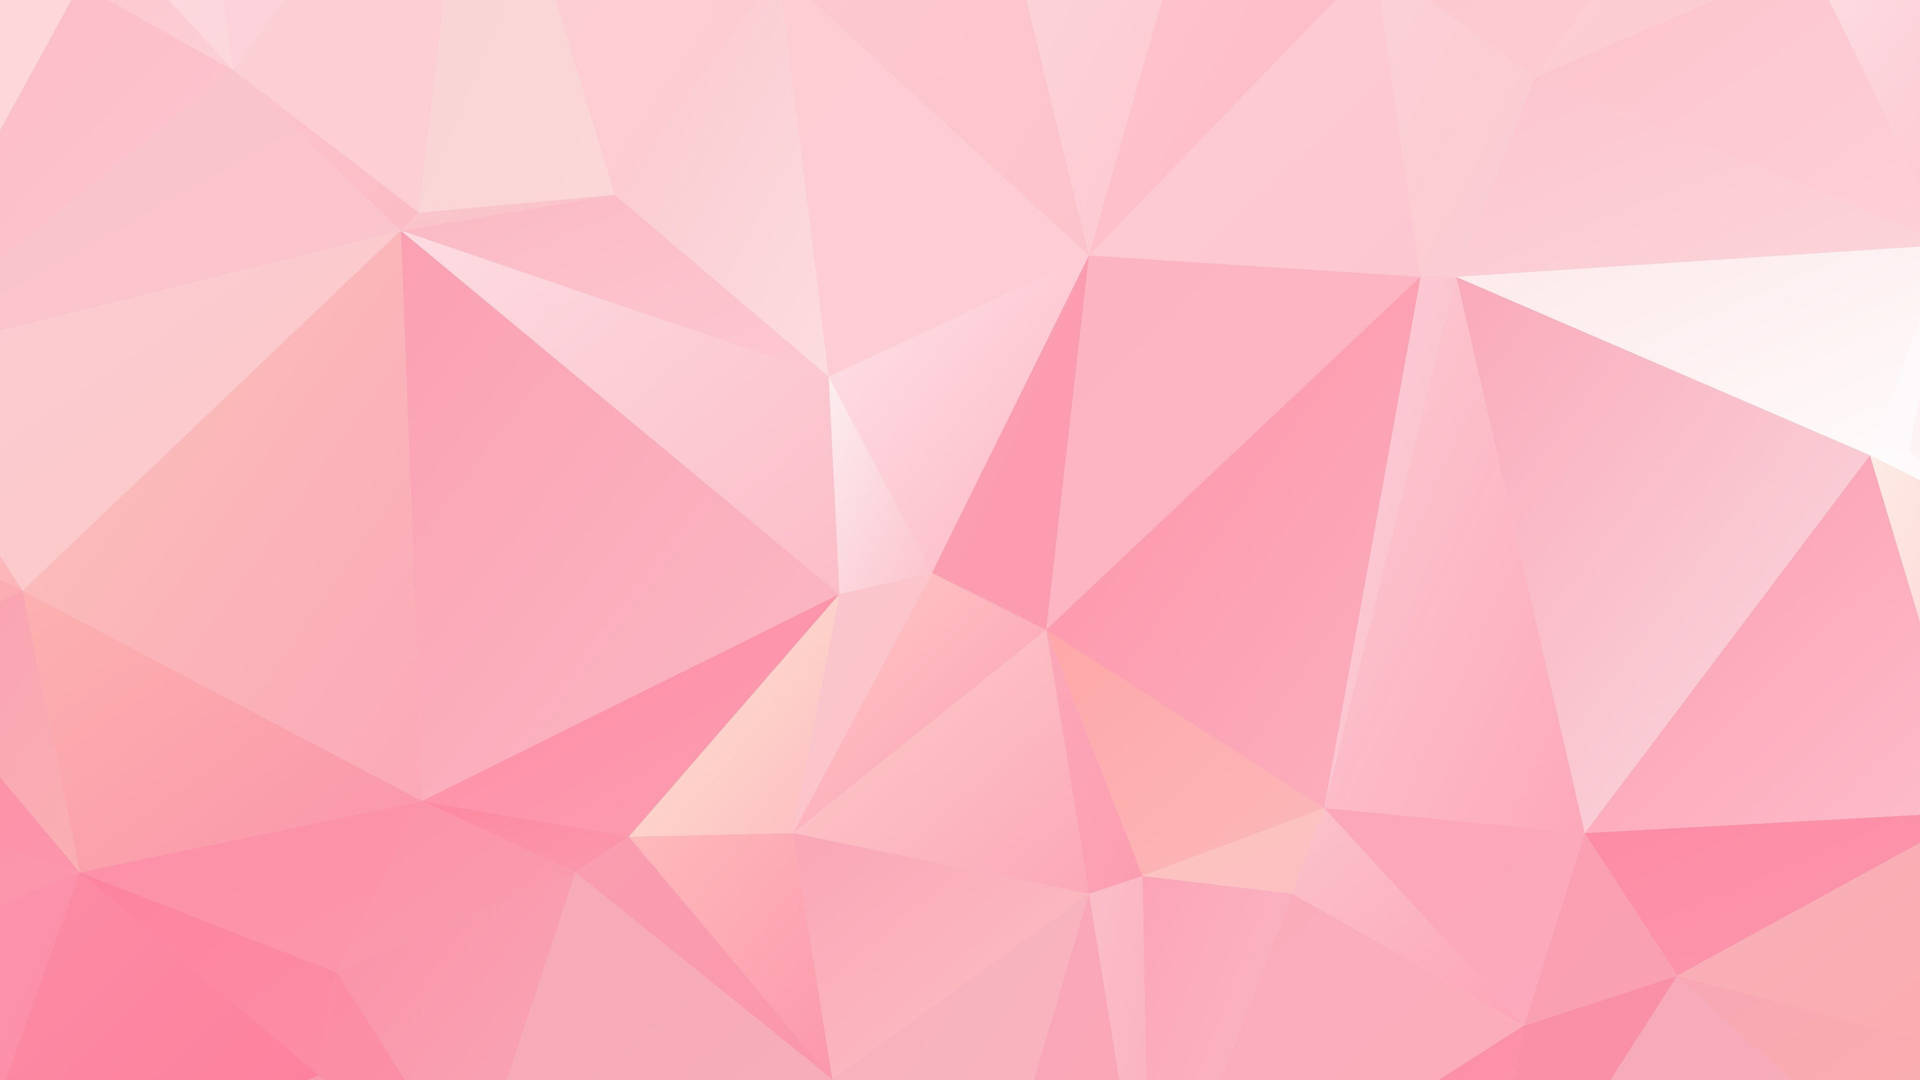 Pink Aesthetic Geometric Shapes Full 4k Wallpaper